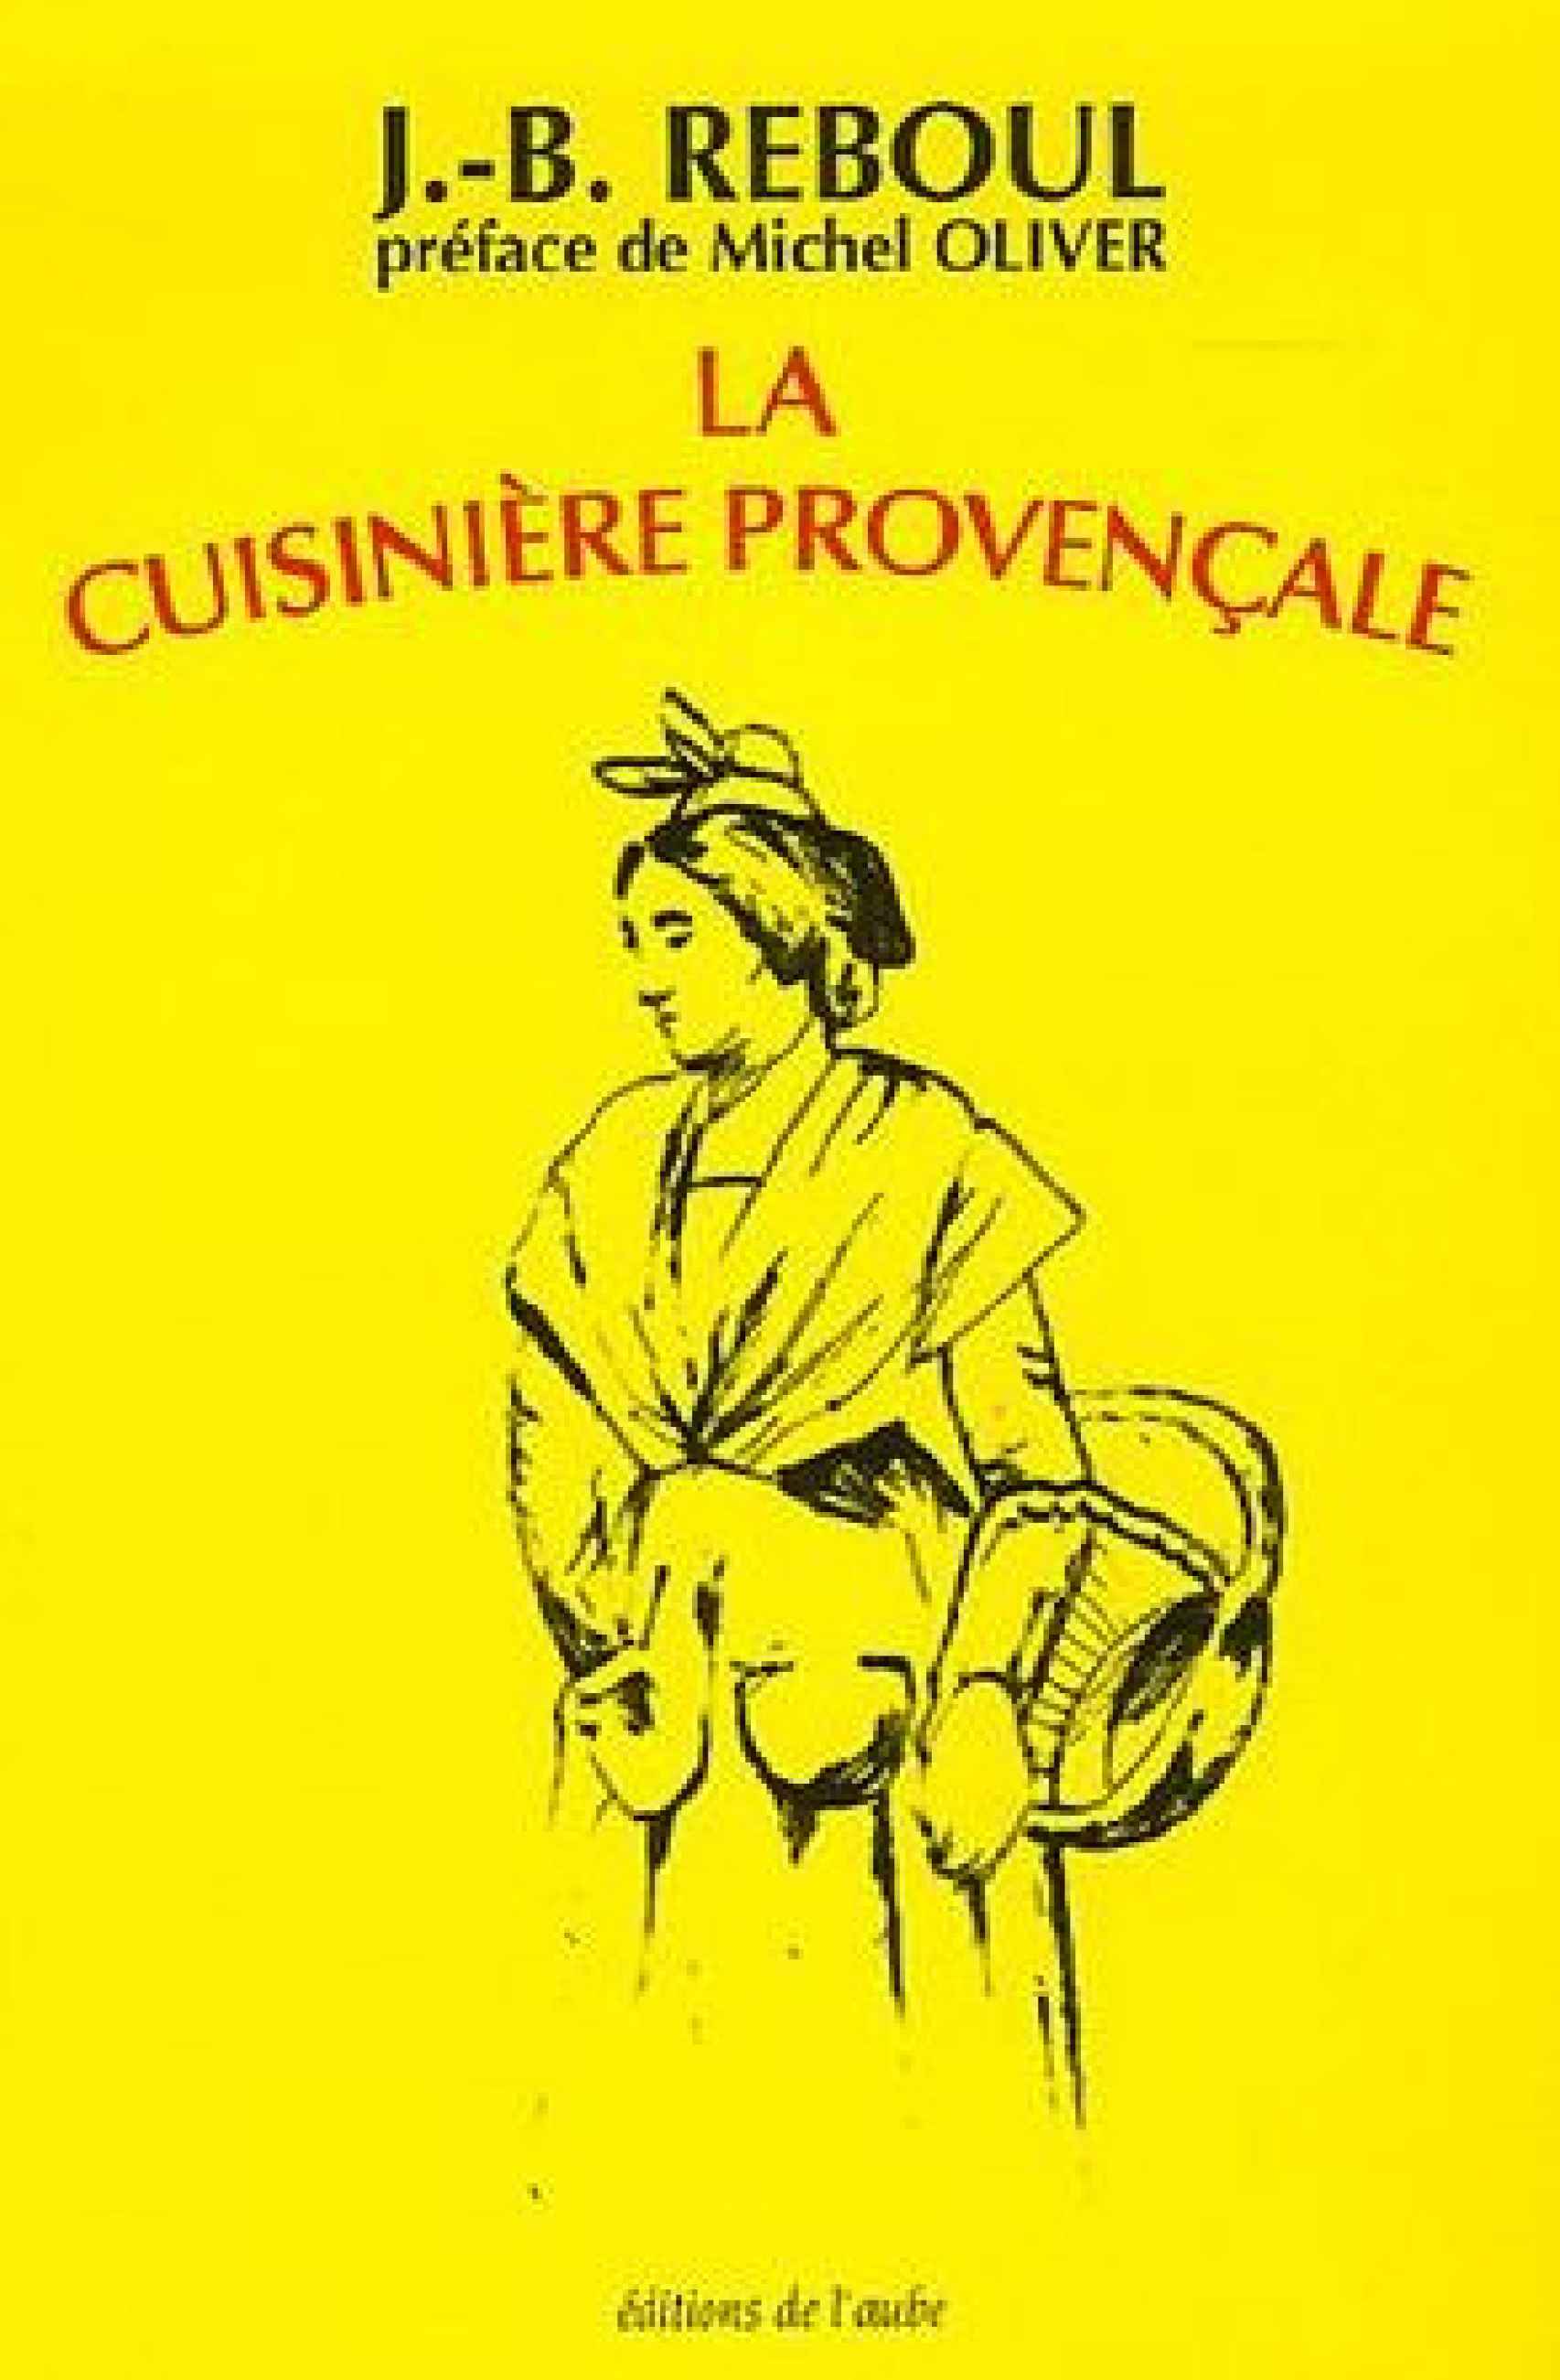 El libro La Cuisinière Provençale